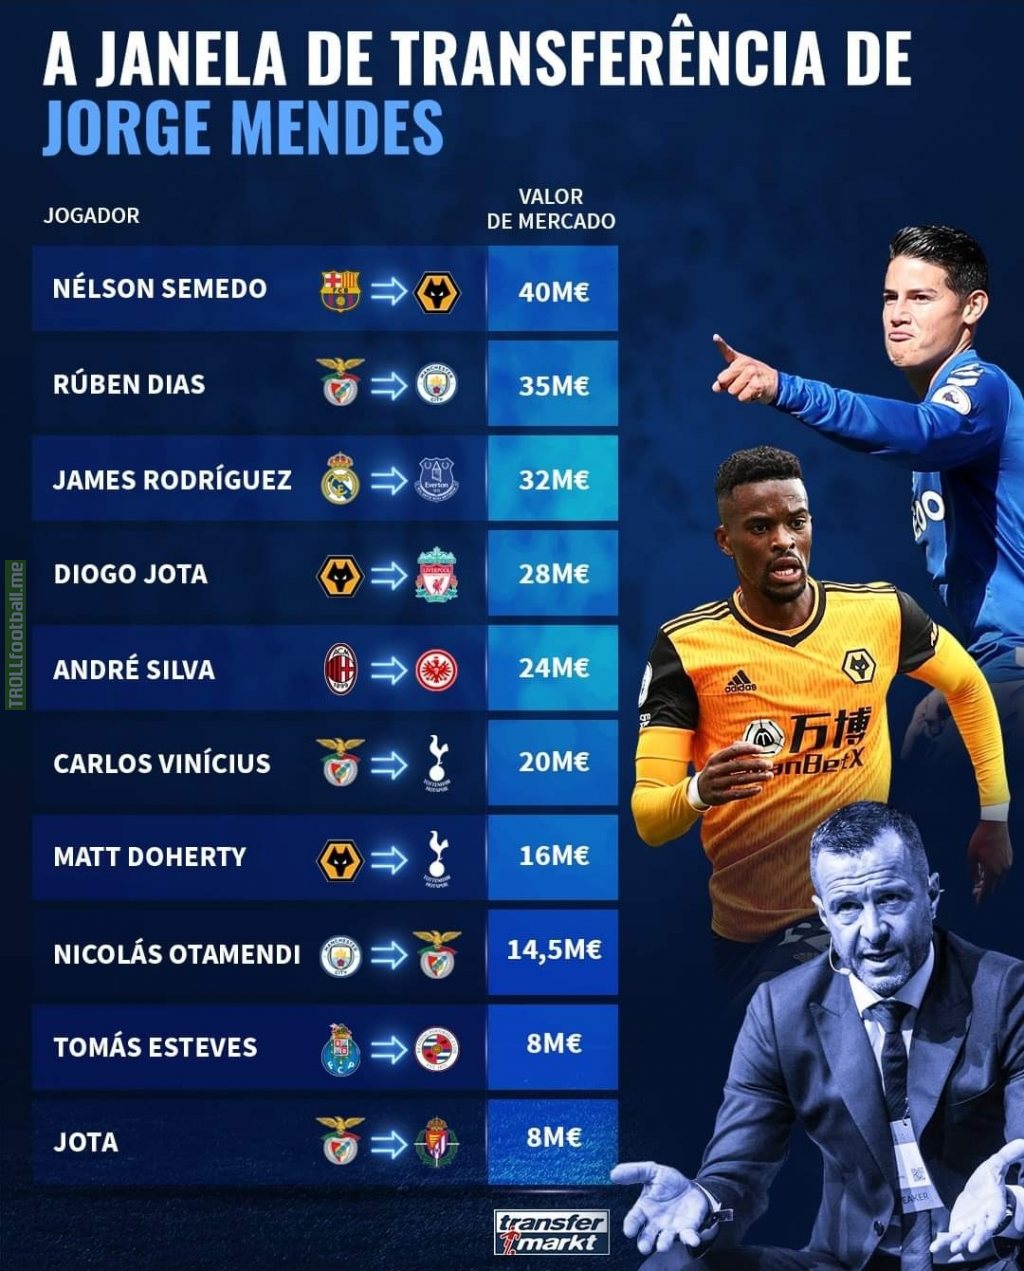 Jorge Mendes' transfer window